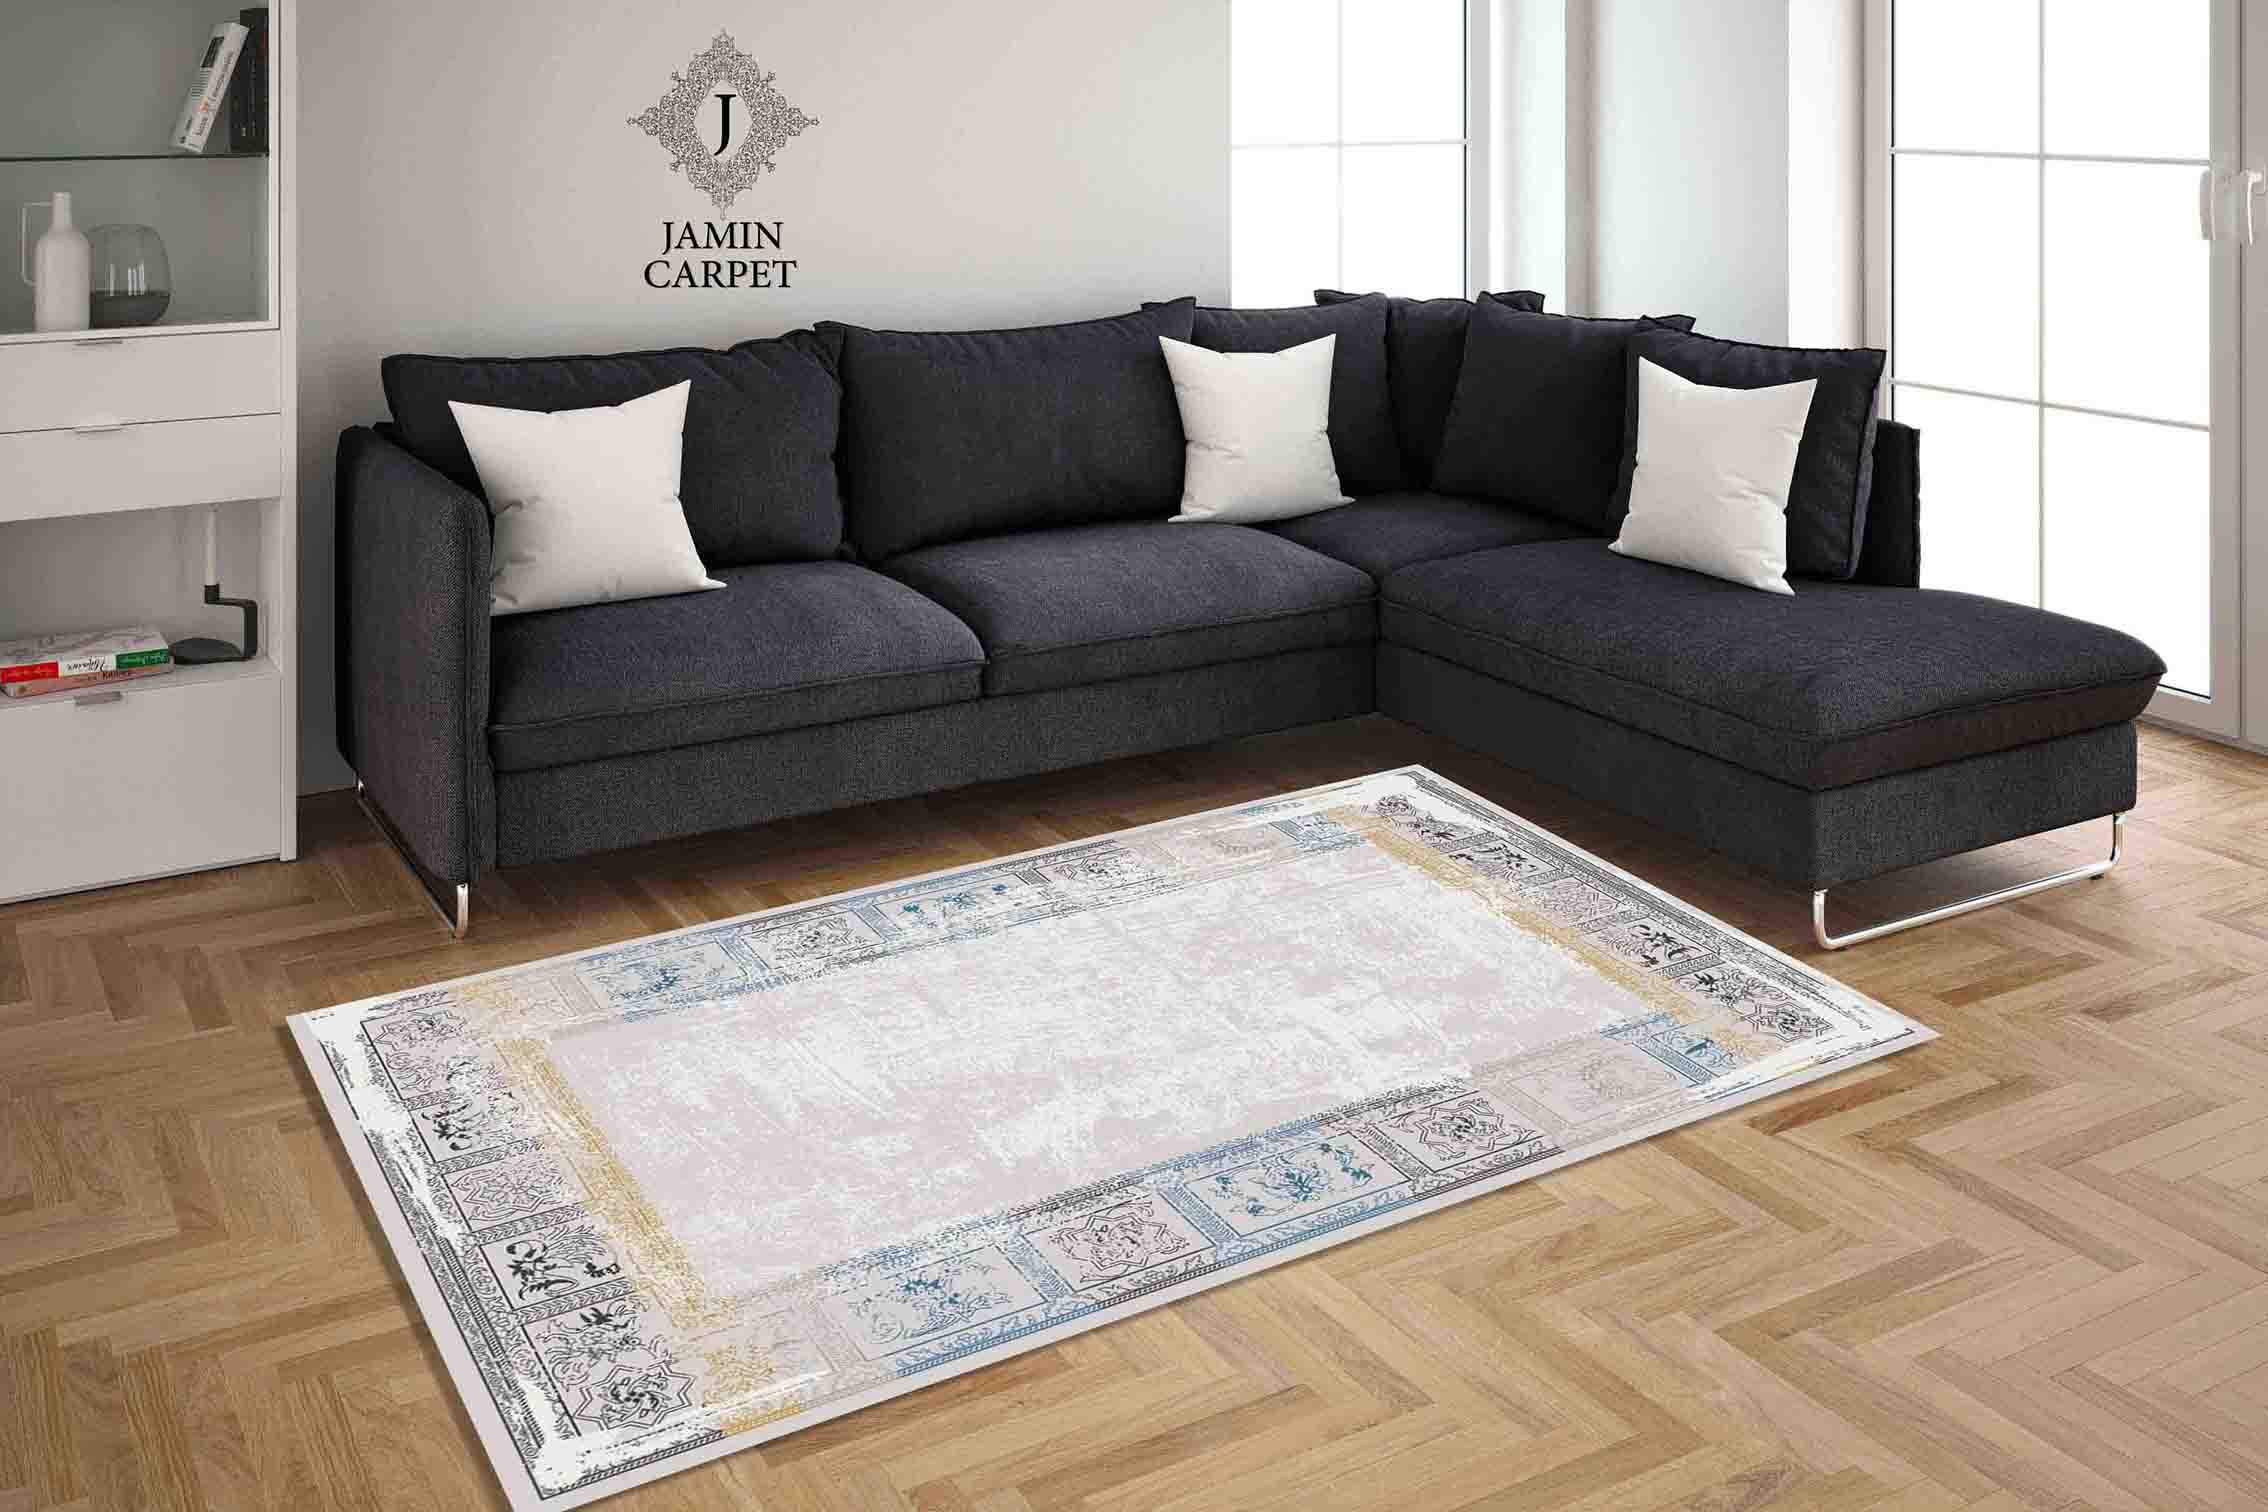 Fantasy carpet, code 244, comb 400, density 1800, all acrylic